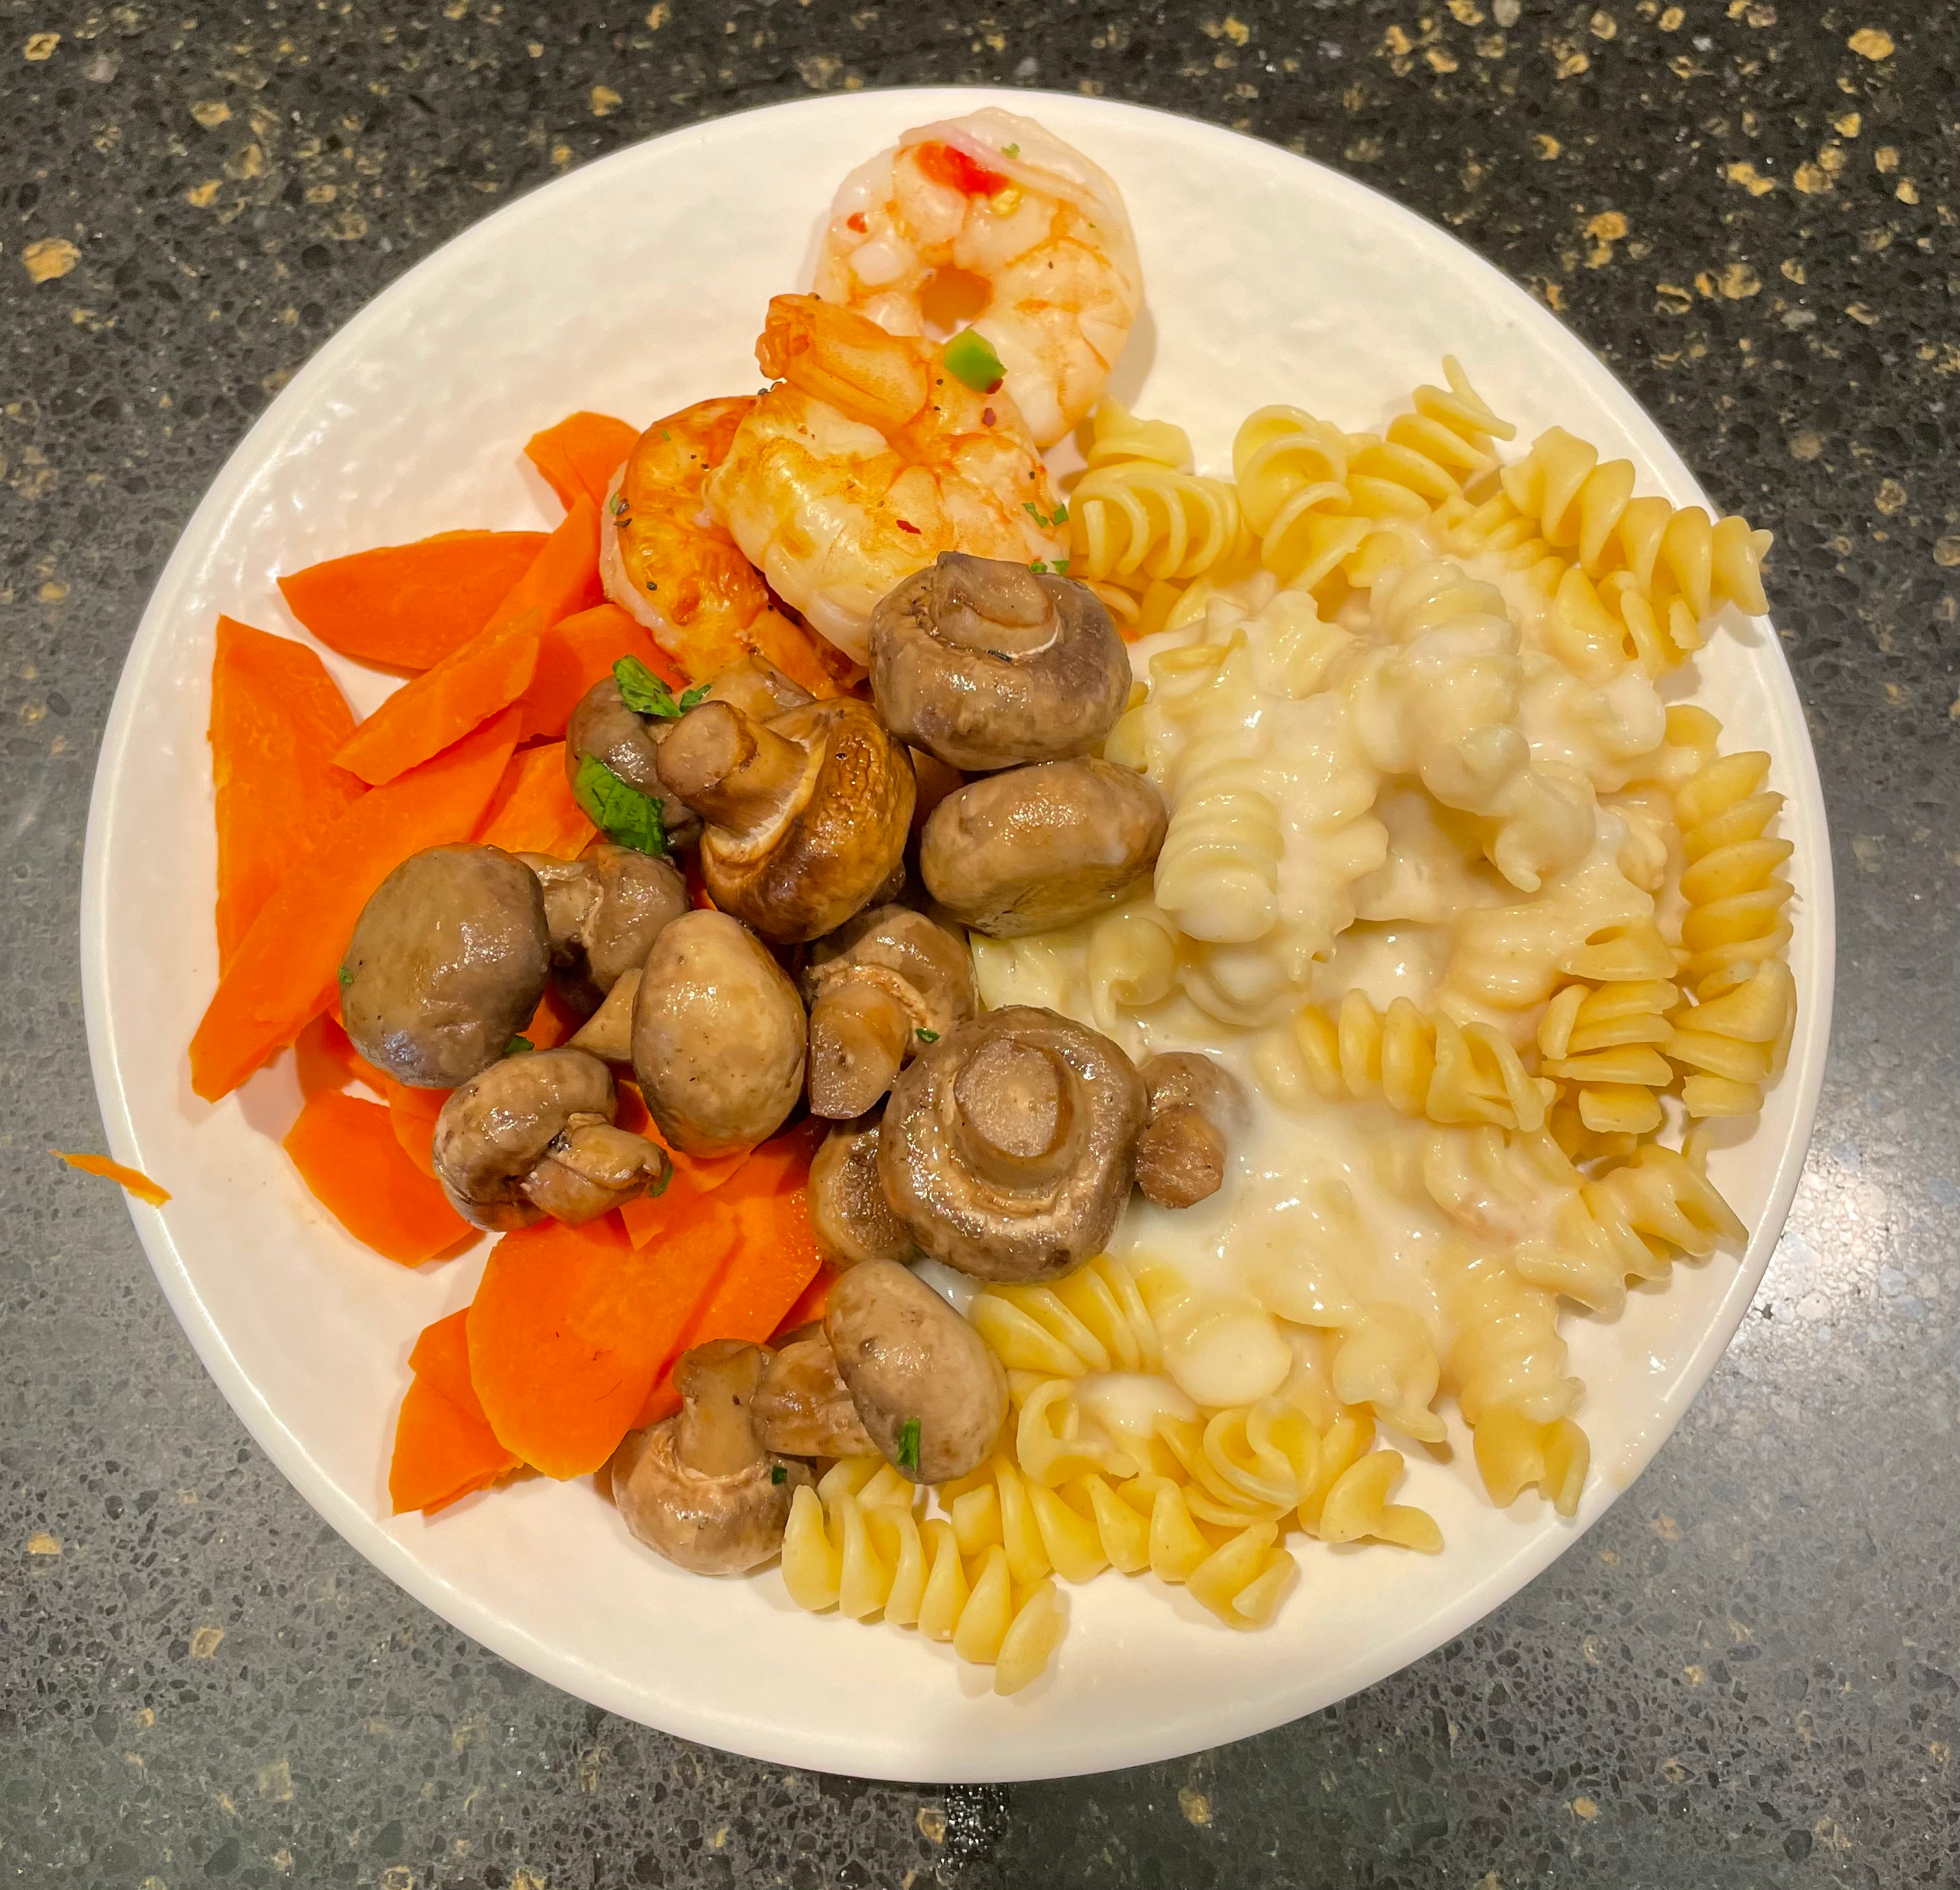 Pasta with alfredo sauce, mushrooms, carrots, shrimp